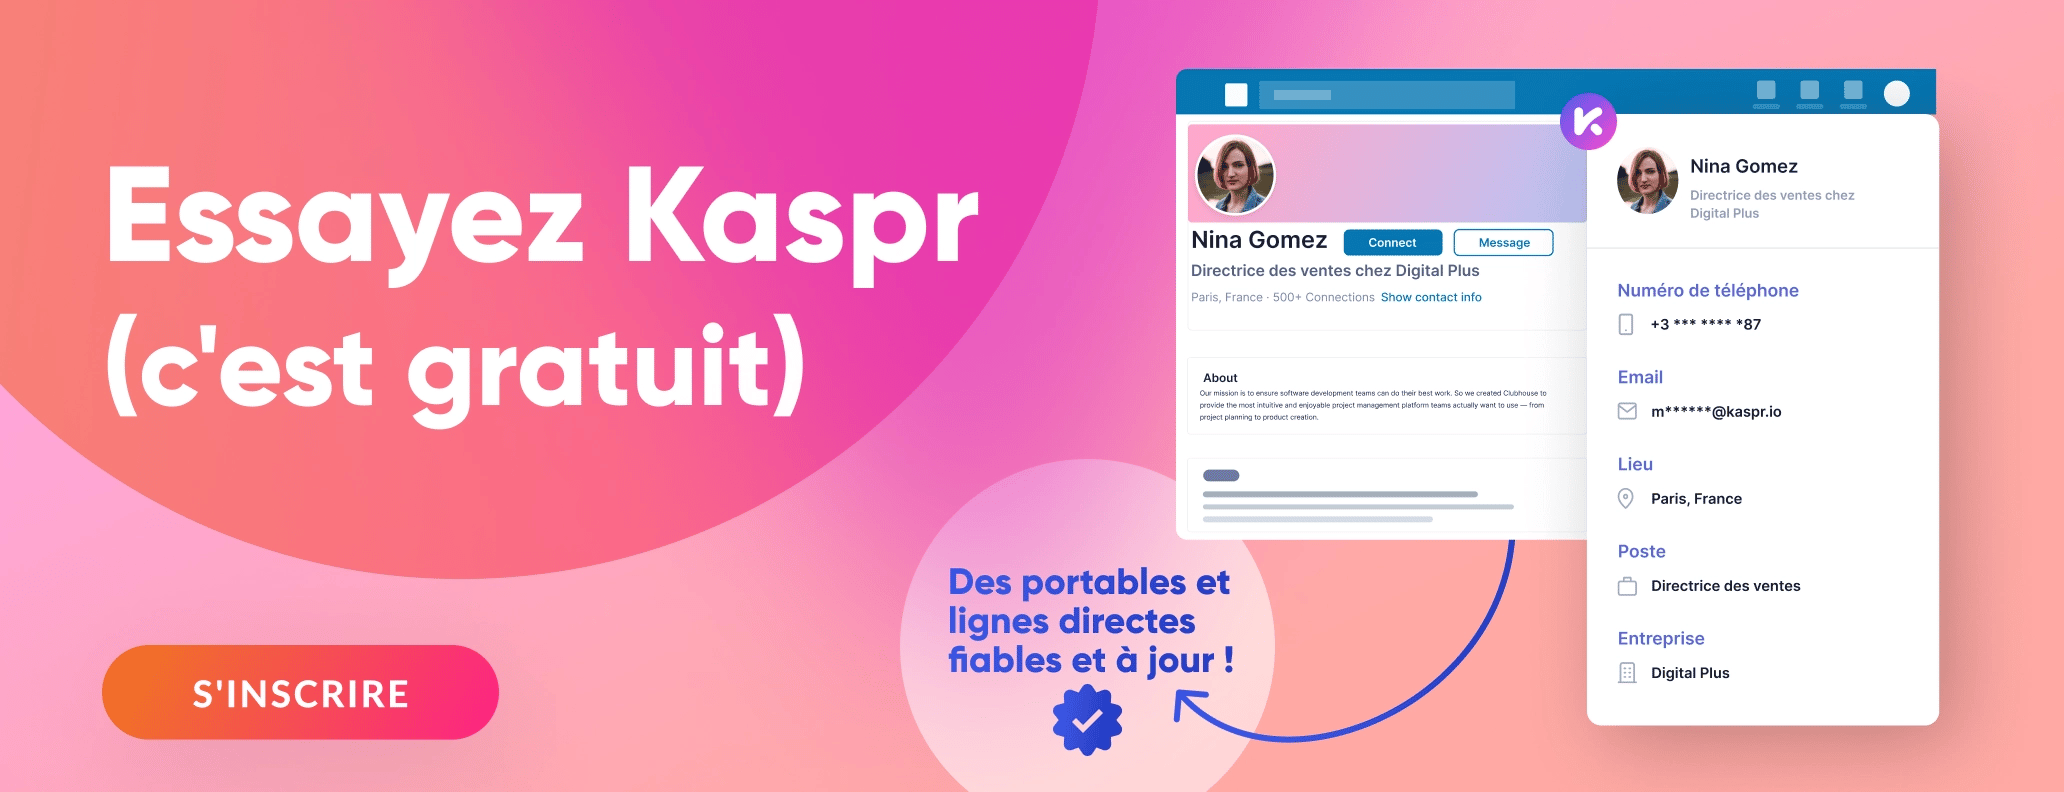 FR_try-kaspr-free-cta-banner (2)